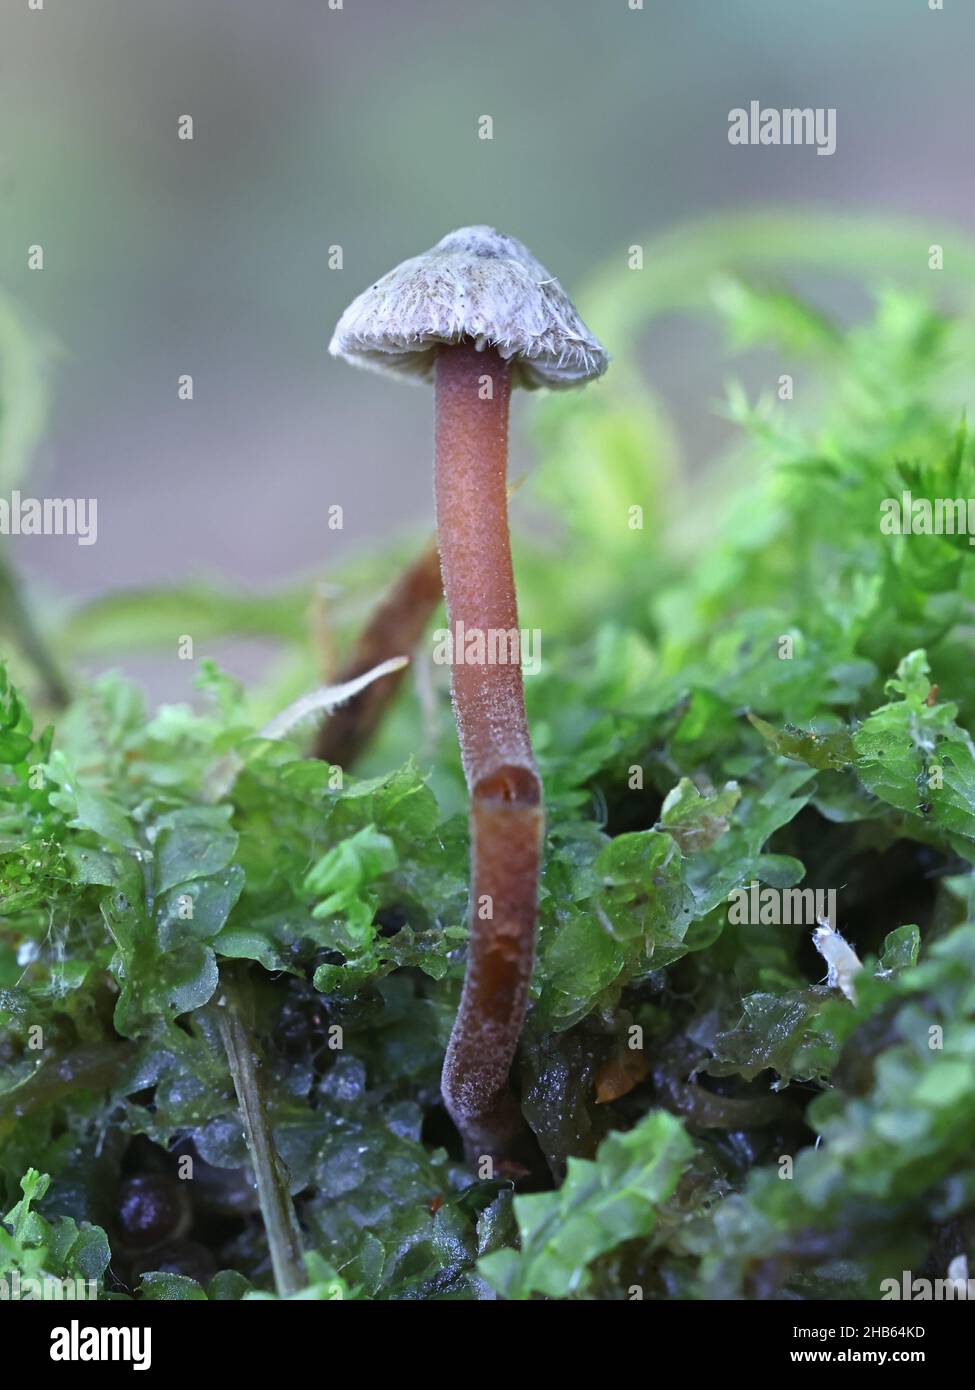 Inocybe petiginosa, commonly known as scurfy fibrecap, wild mushroom from Finland Stock Photo